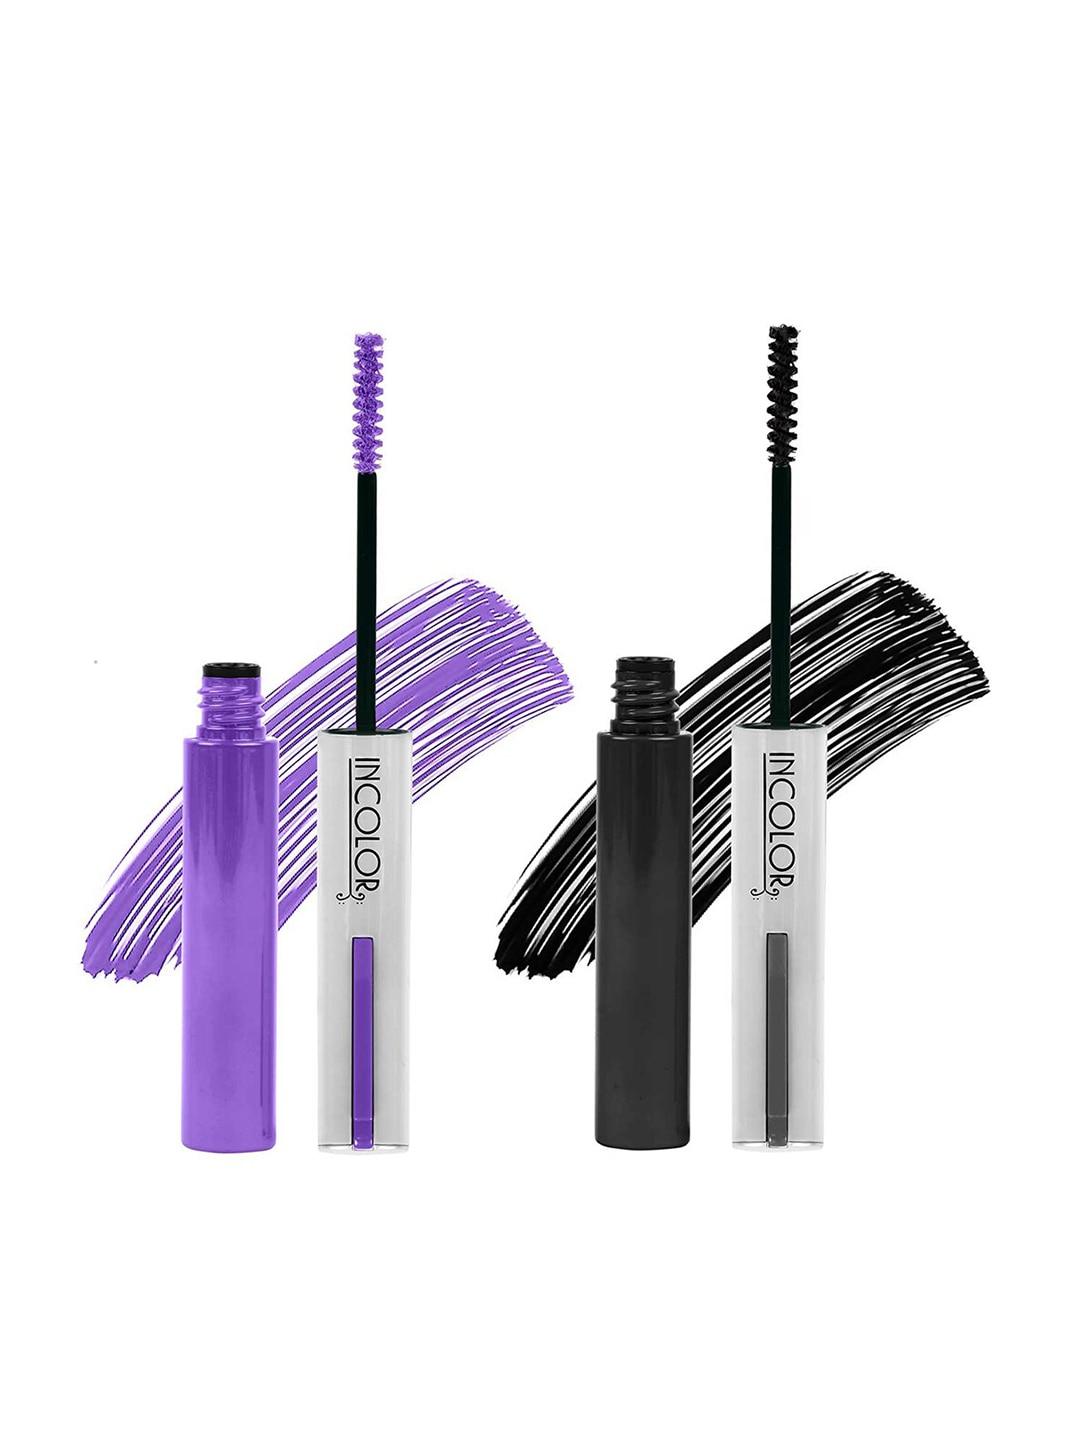 incolor set of 2 long lasting mascaras 6 ml each - smoky black 01 & true purple 06